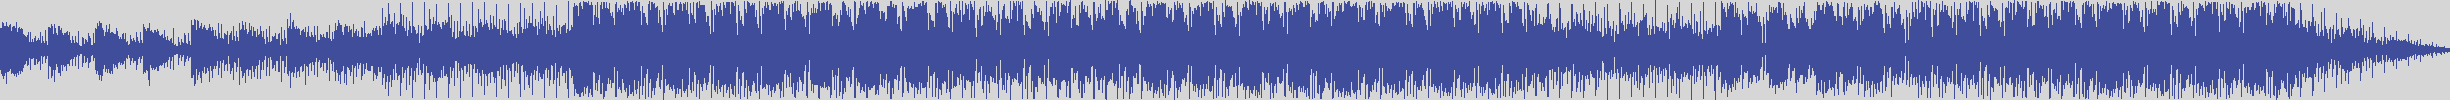 noclouds_chillout [NOC031] Dan Haany - Parma [Original Mix] audio wave form